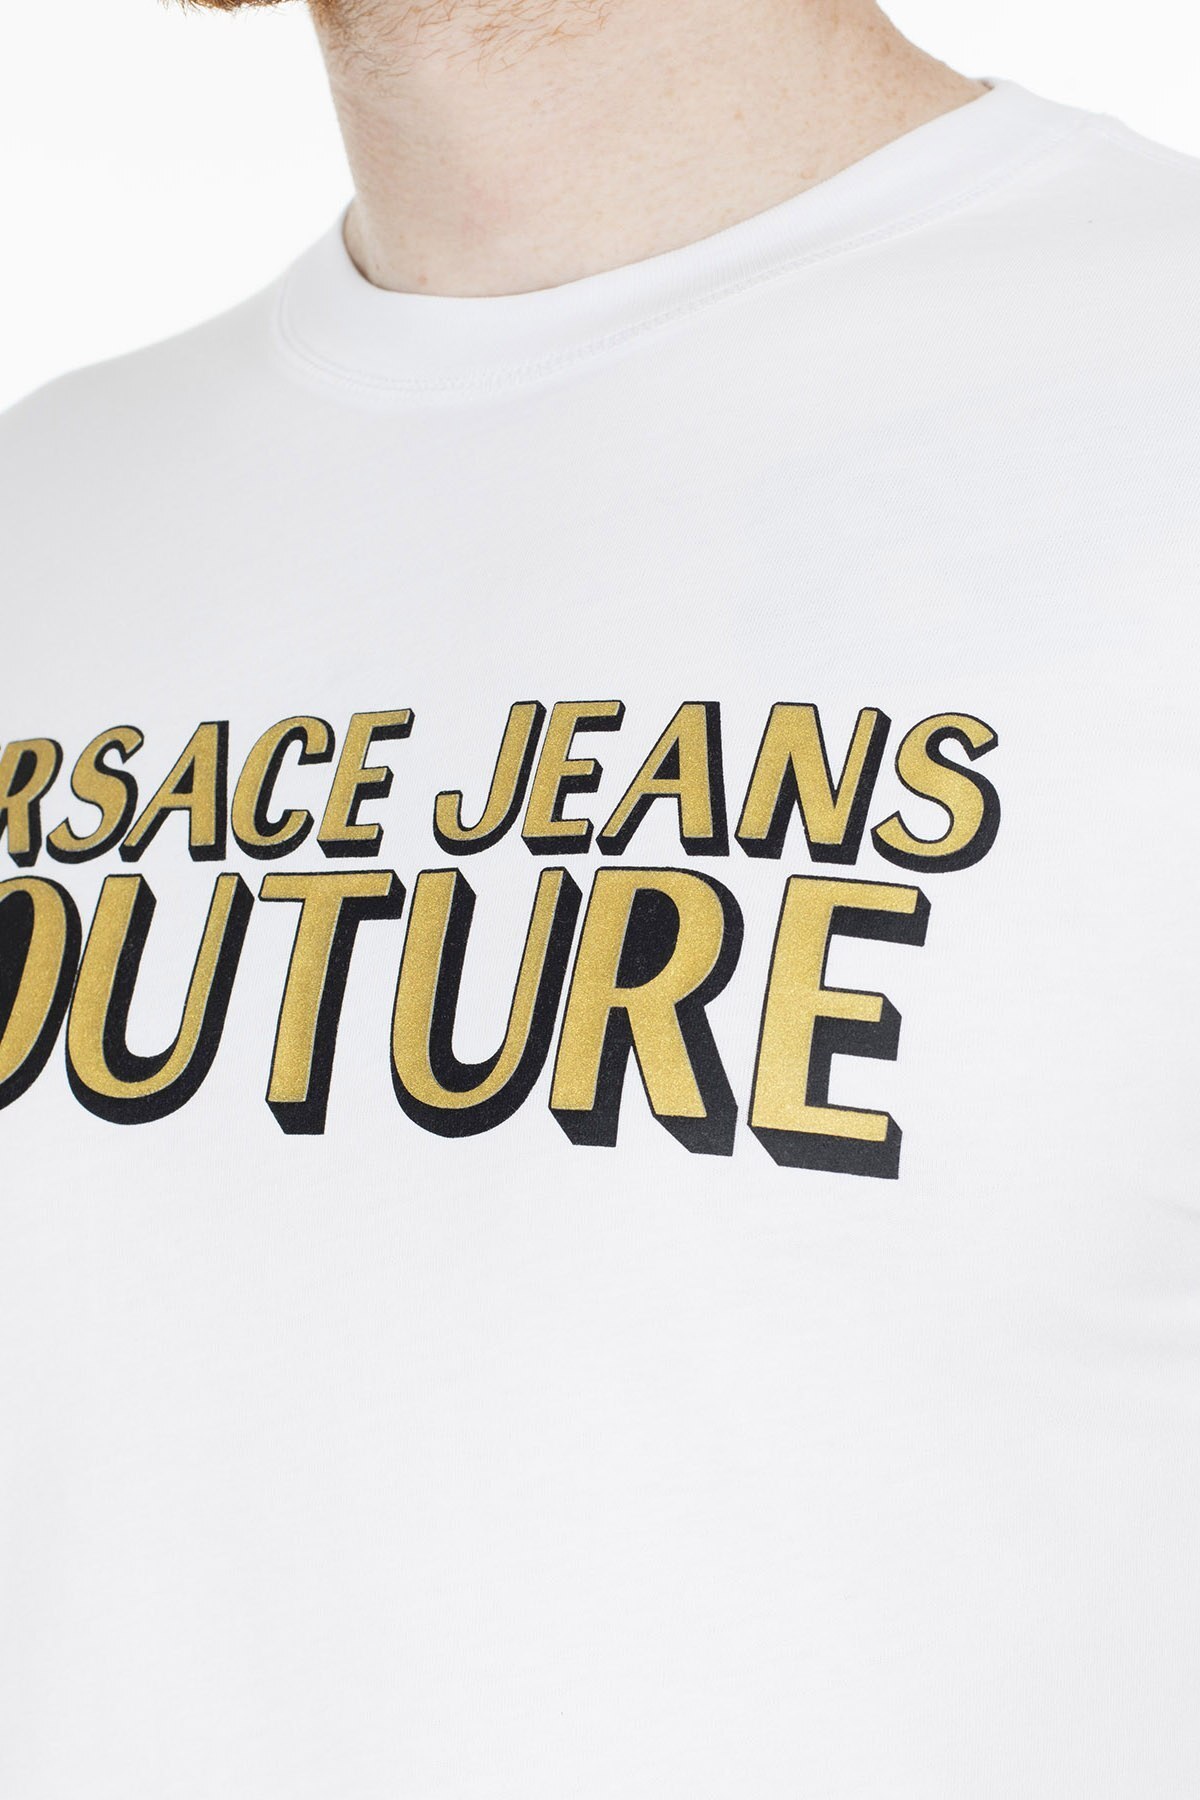 Versace Jeans Couture Erkek T Shirt B3GVB7KA 30327 K41 BEYAZ